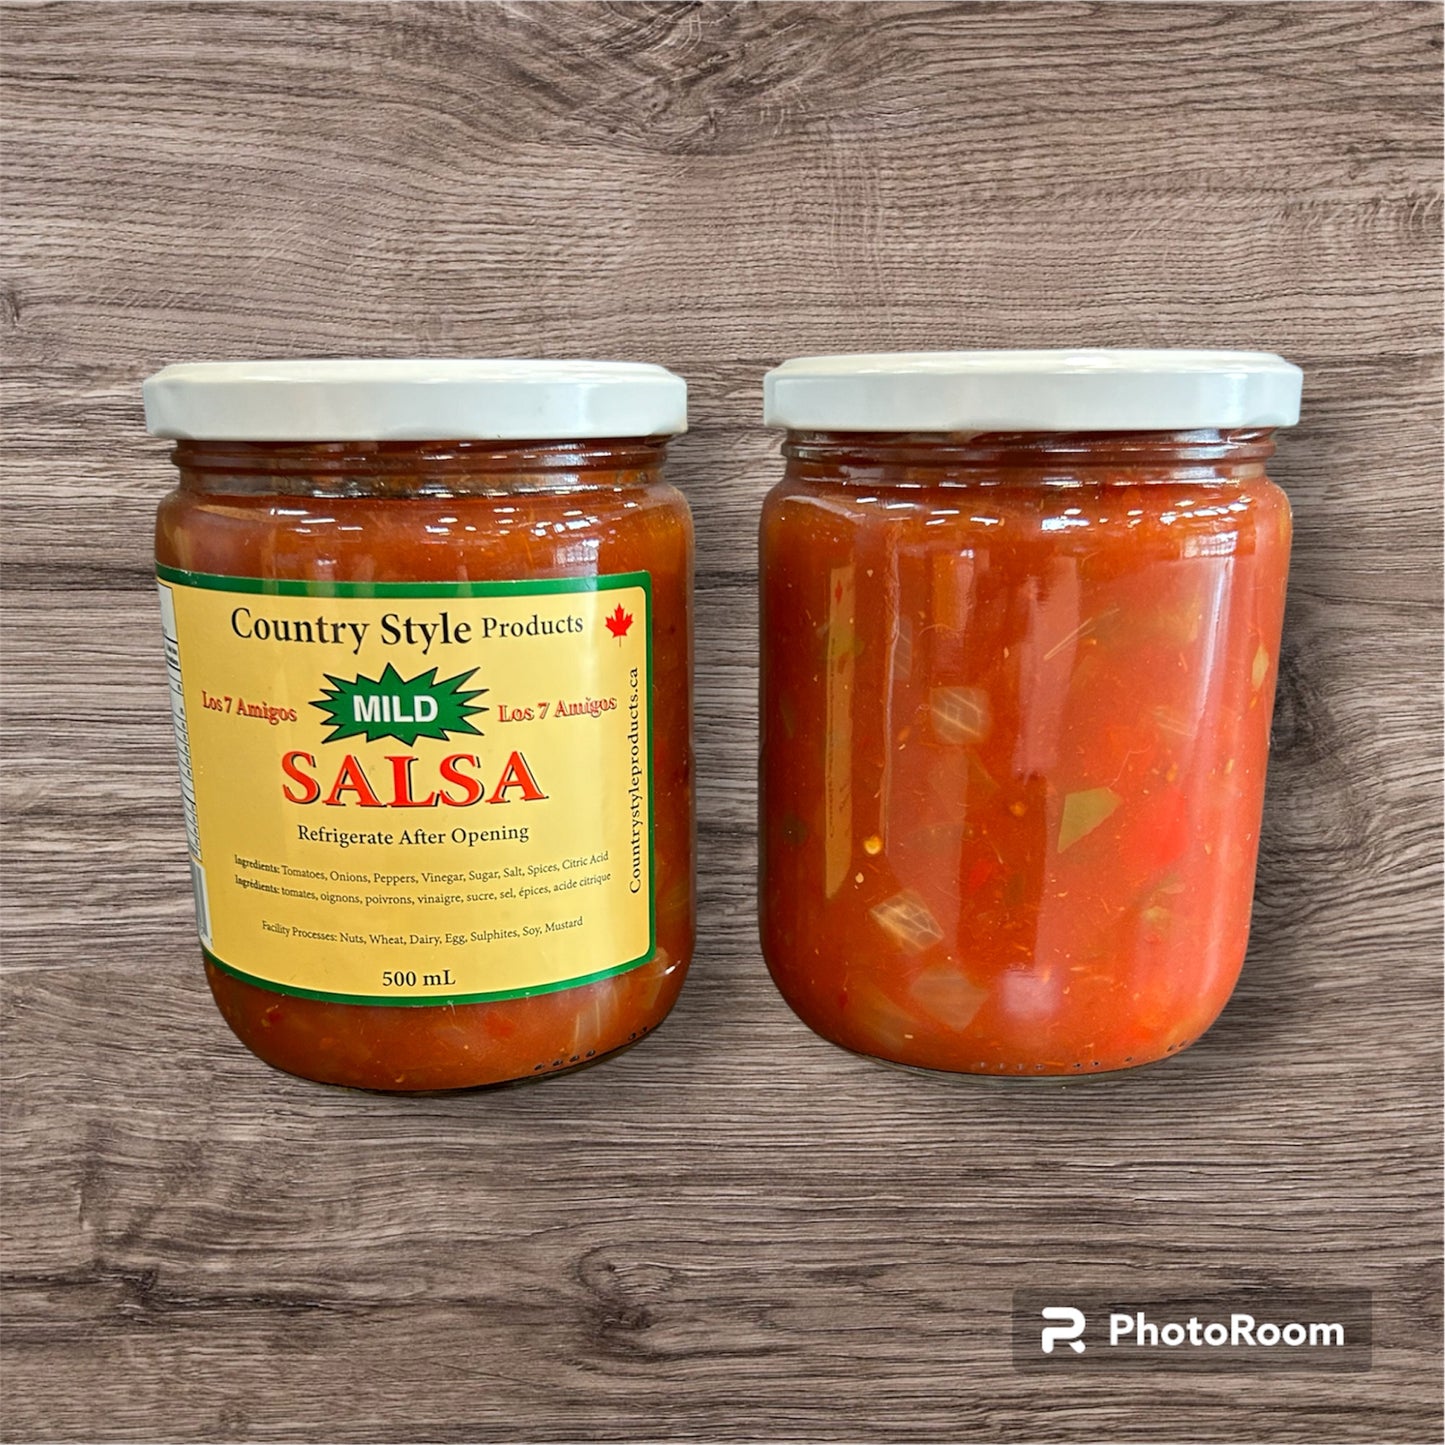 Chili and Salsa